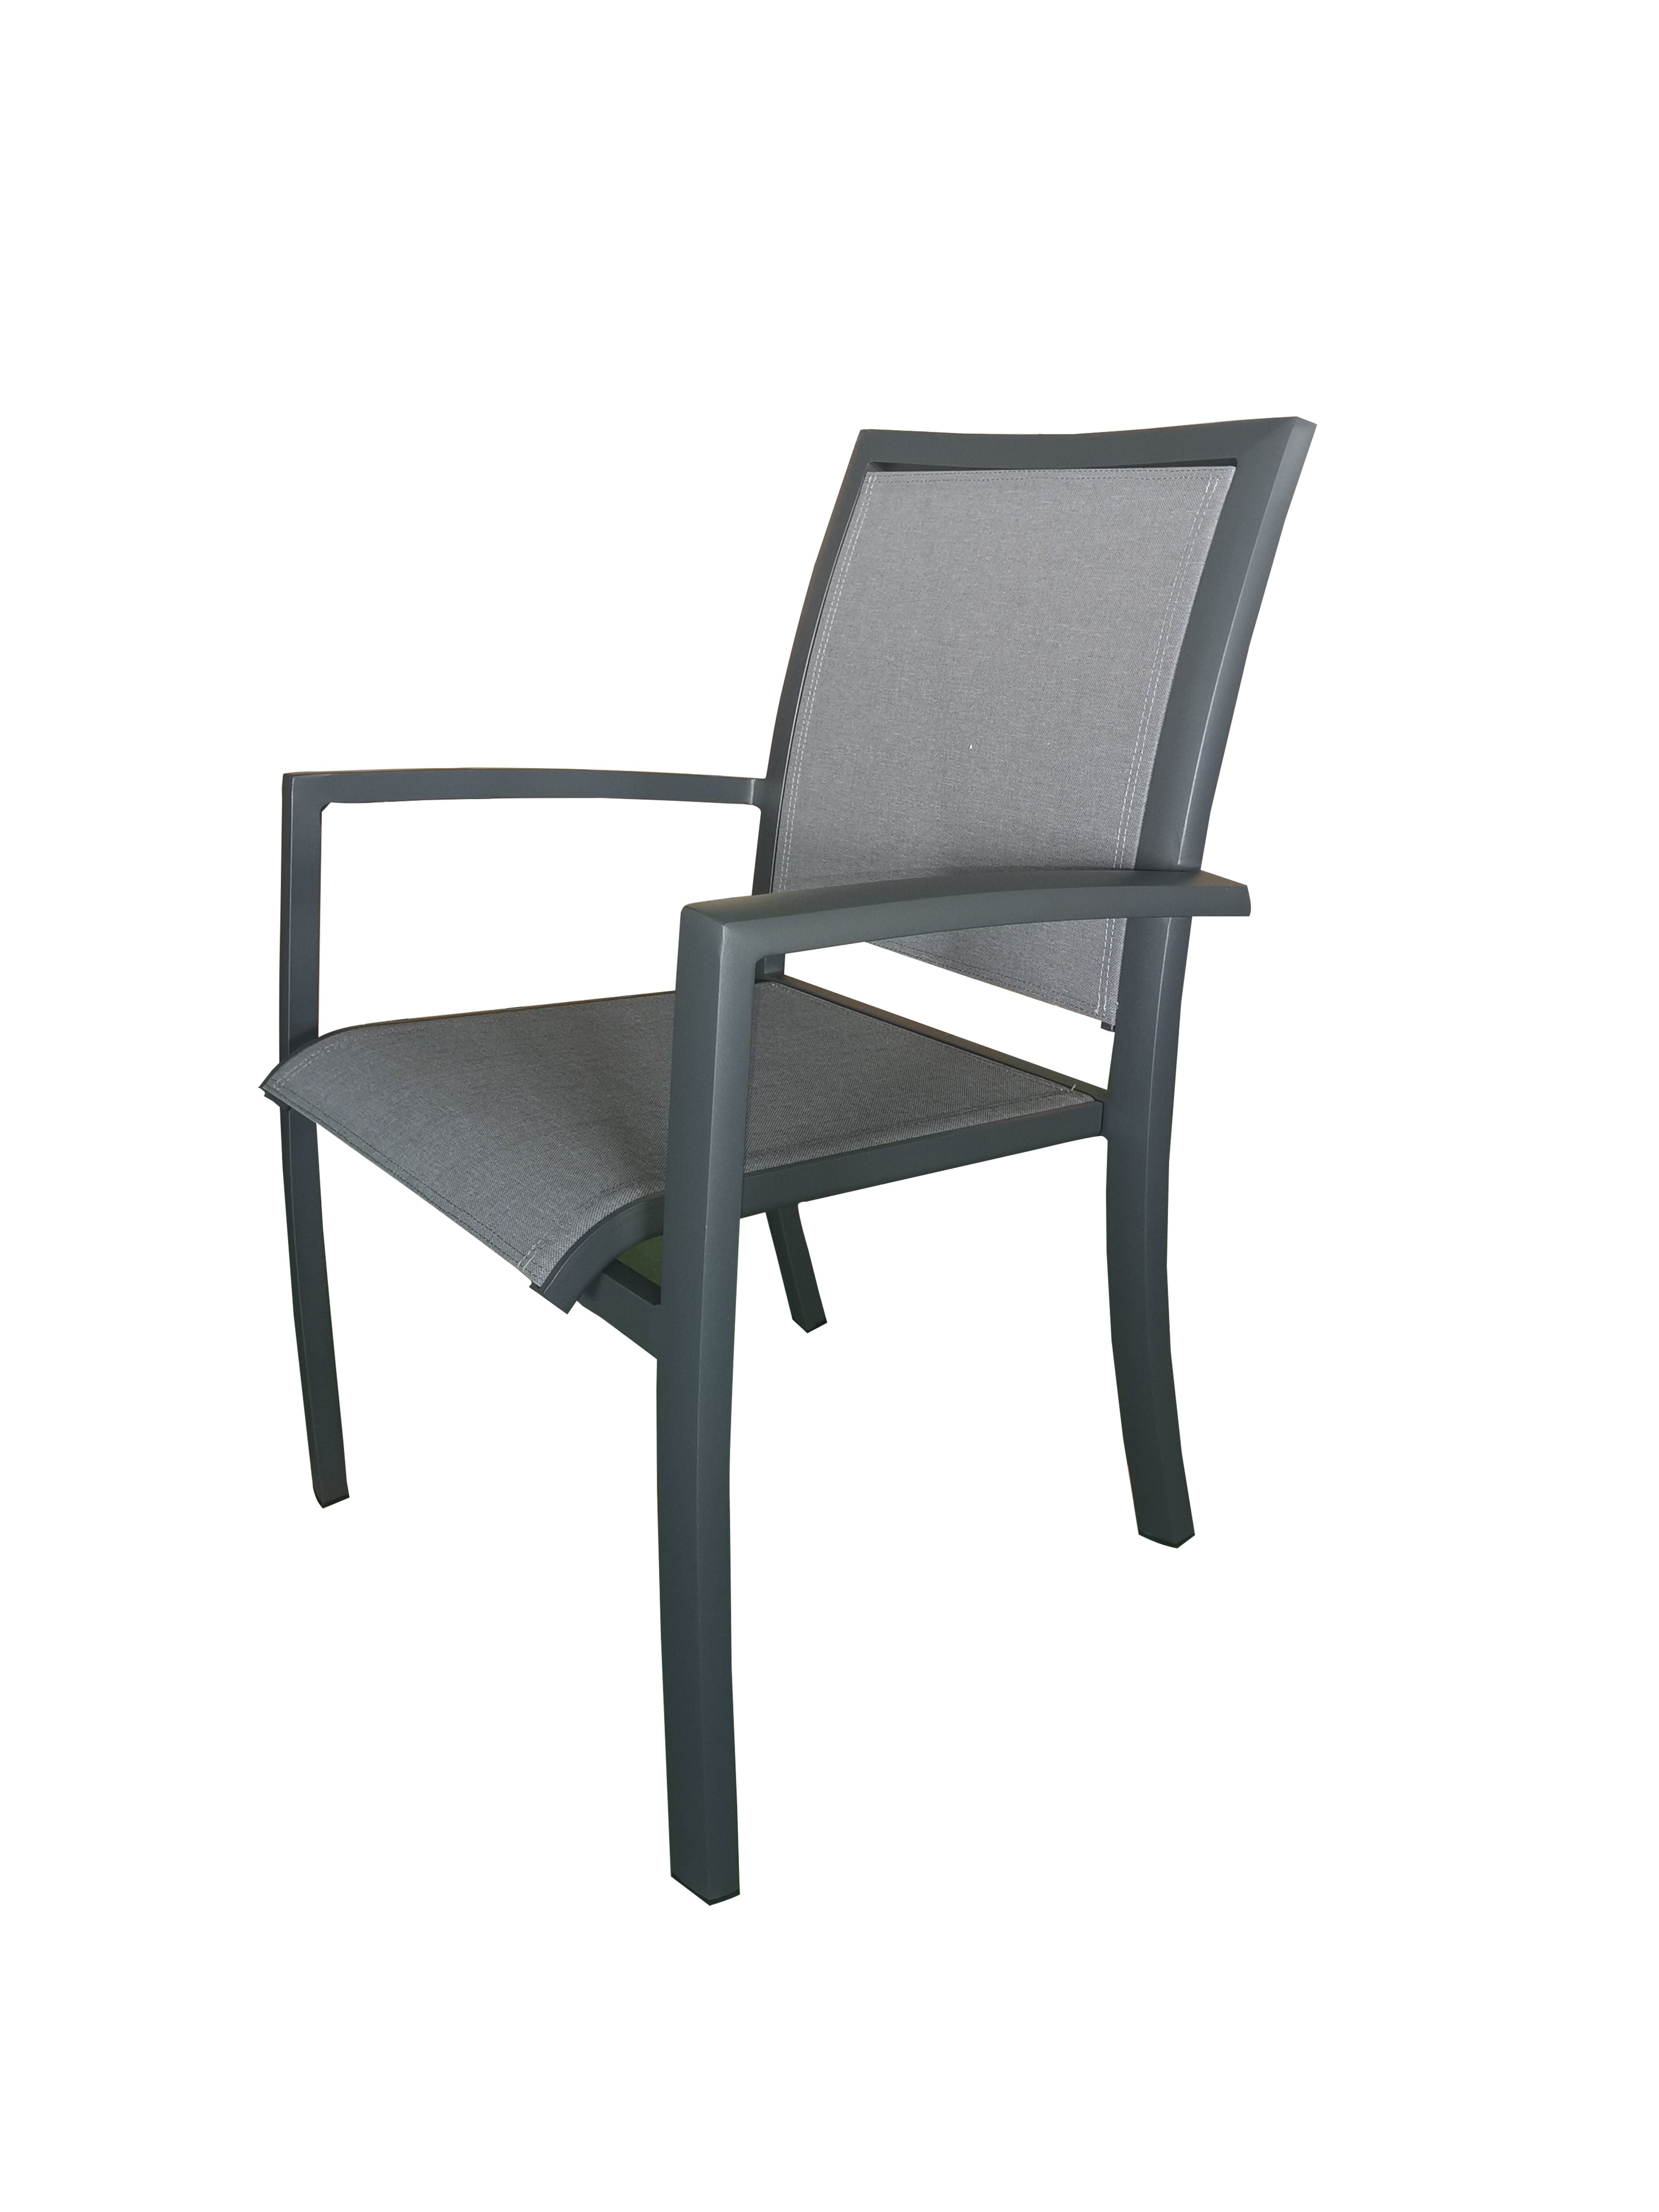 MOSS MOSS-T317GM - Akumal Collection, Charcoal matte aluminum stackable chair with grey mix textilene seat 24" x 31" x H 36"